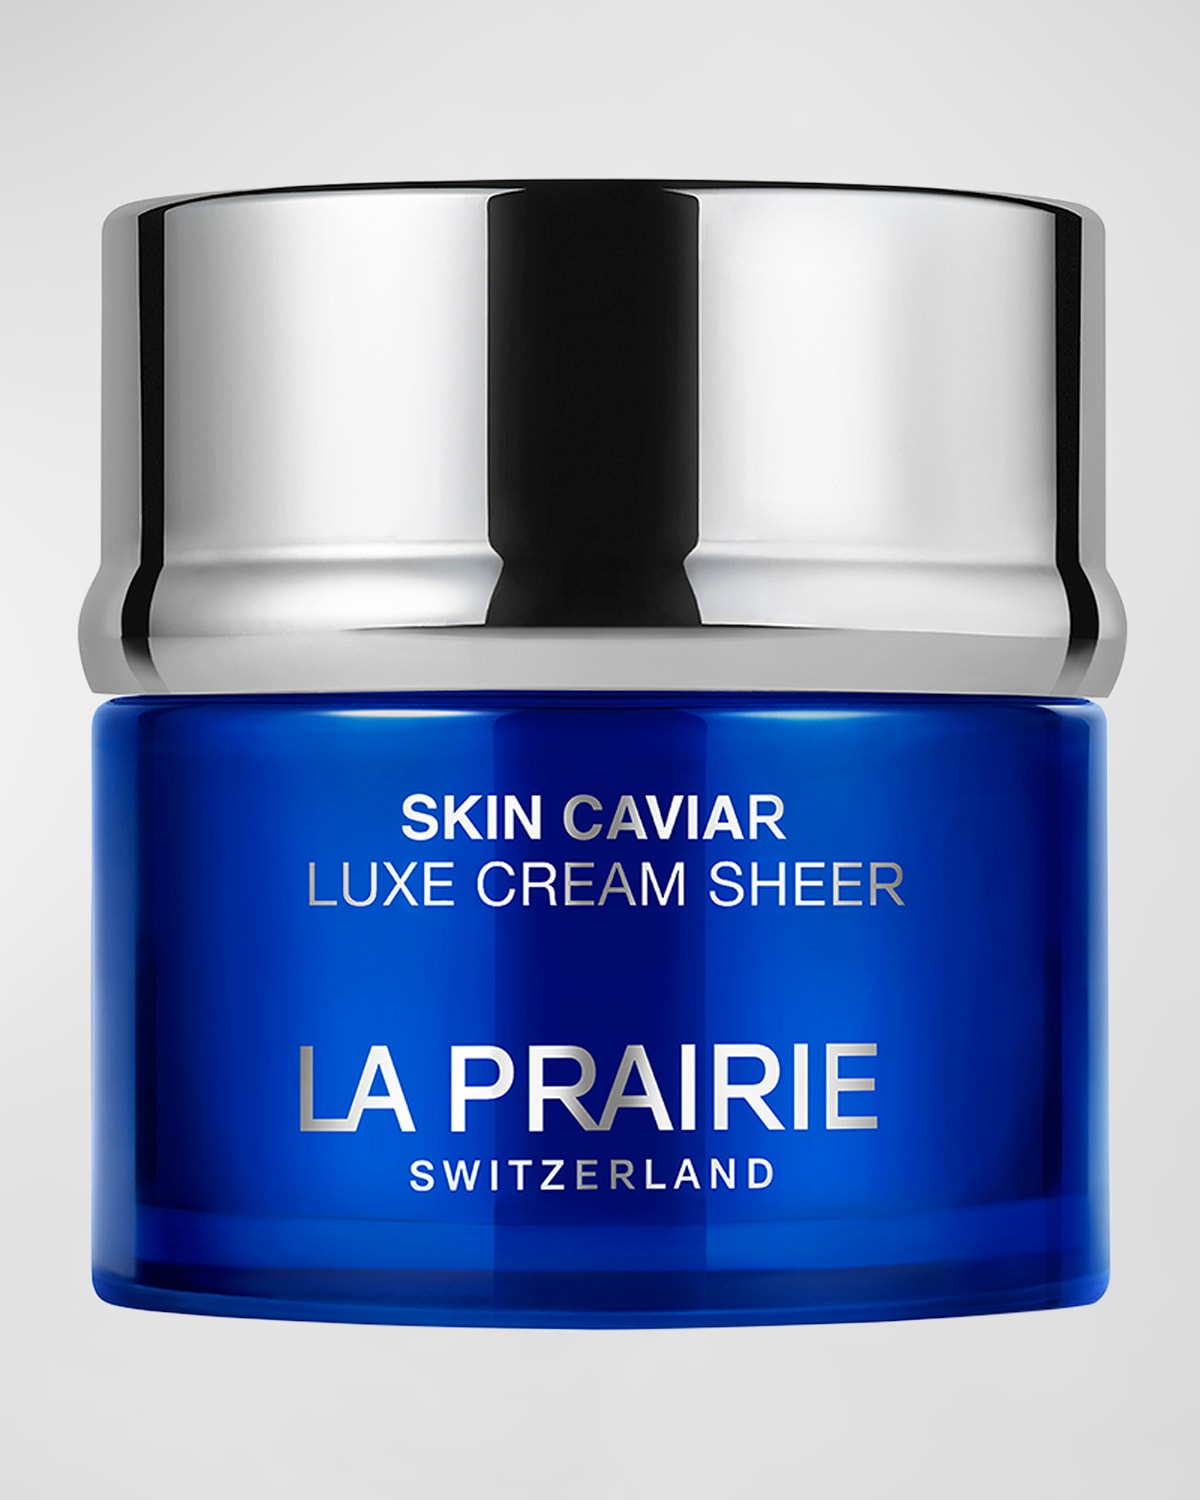 Skin Caviar Luxe Cream Sheer Moisturizer, 1.7 oz.